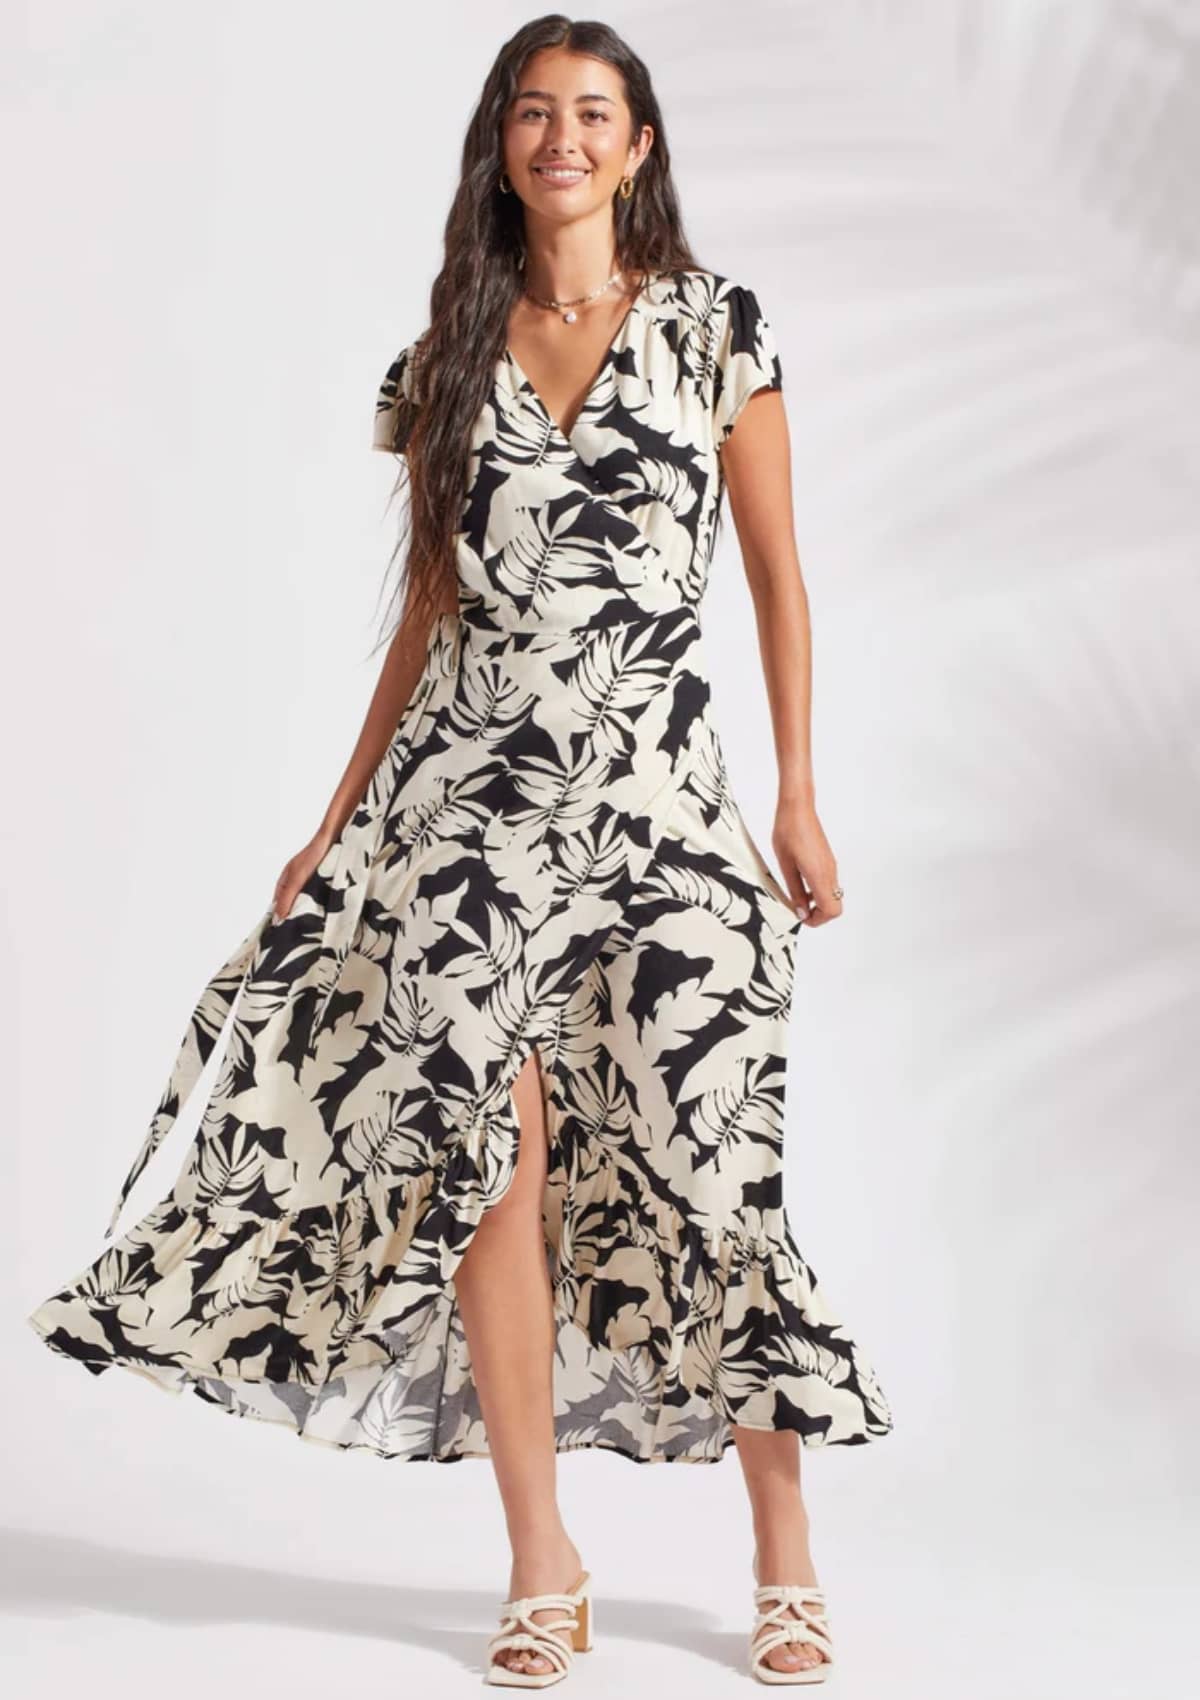 Surplice v-neck black and white floral print dress with slit.